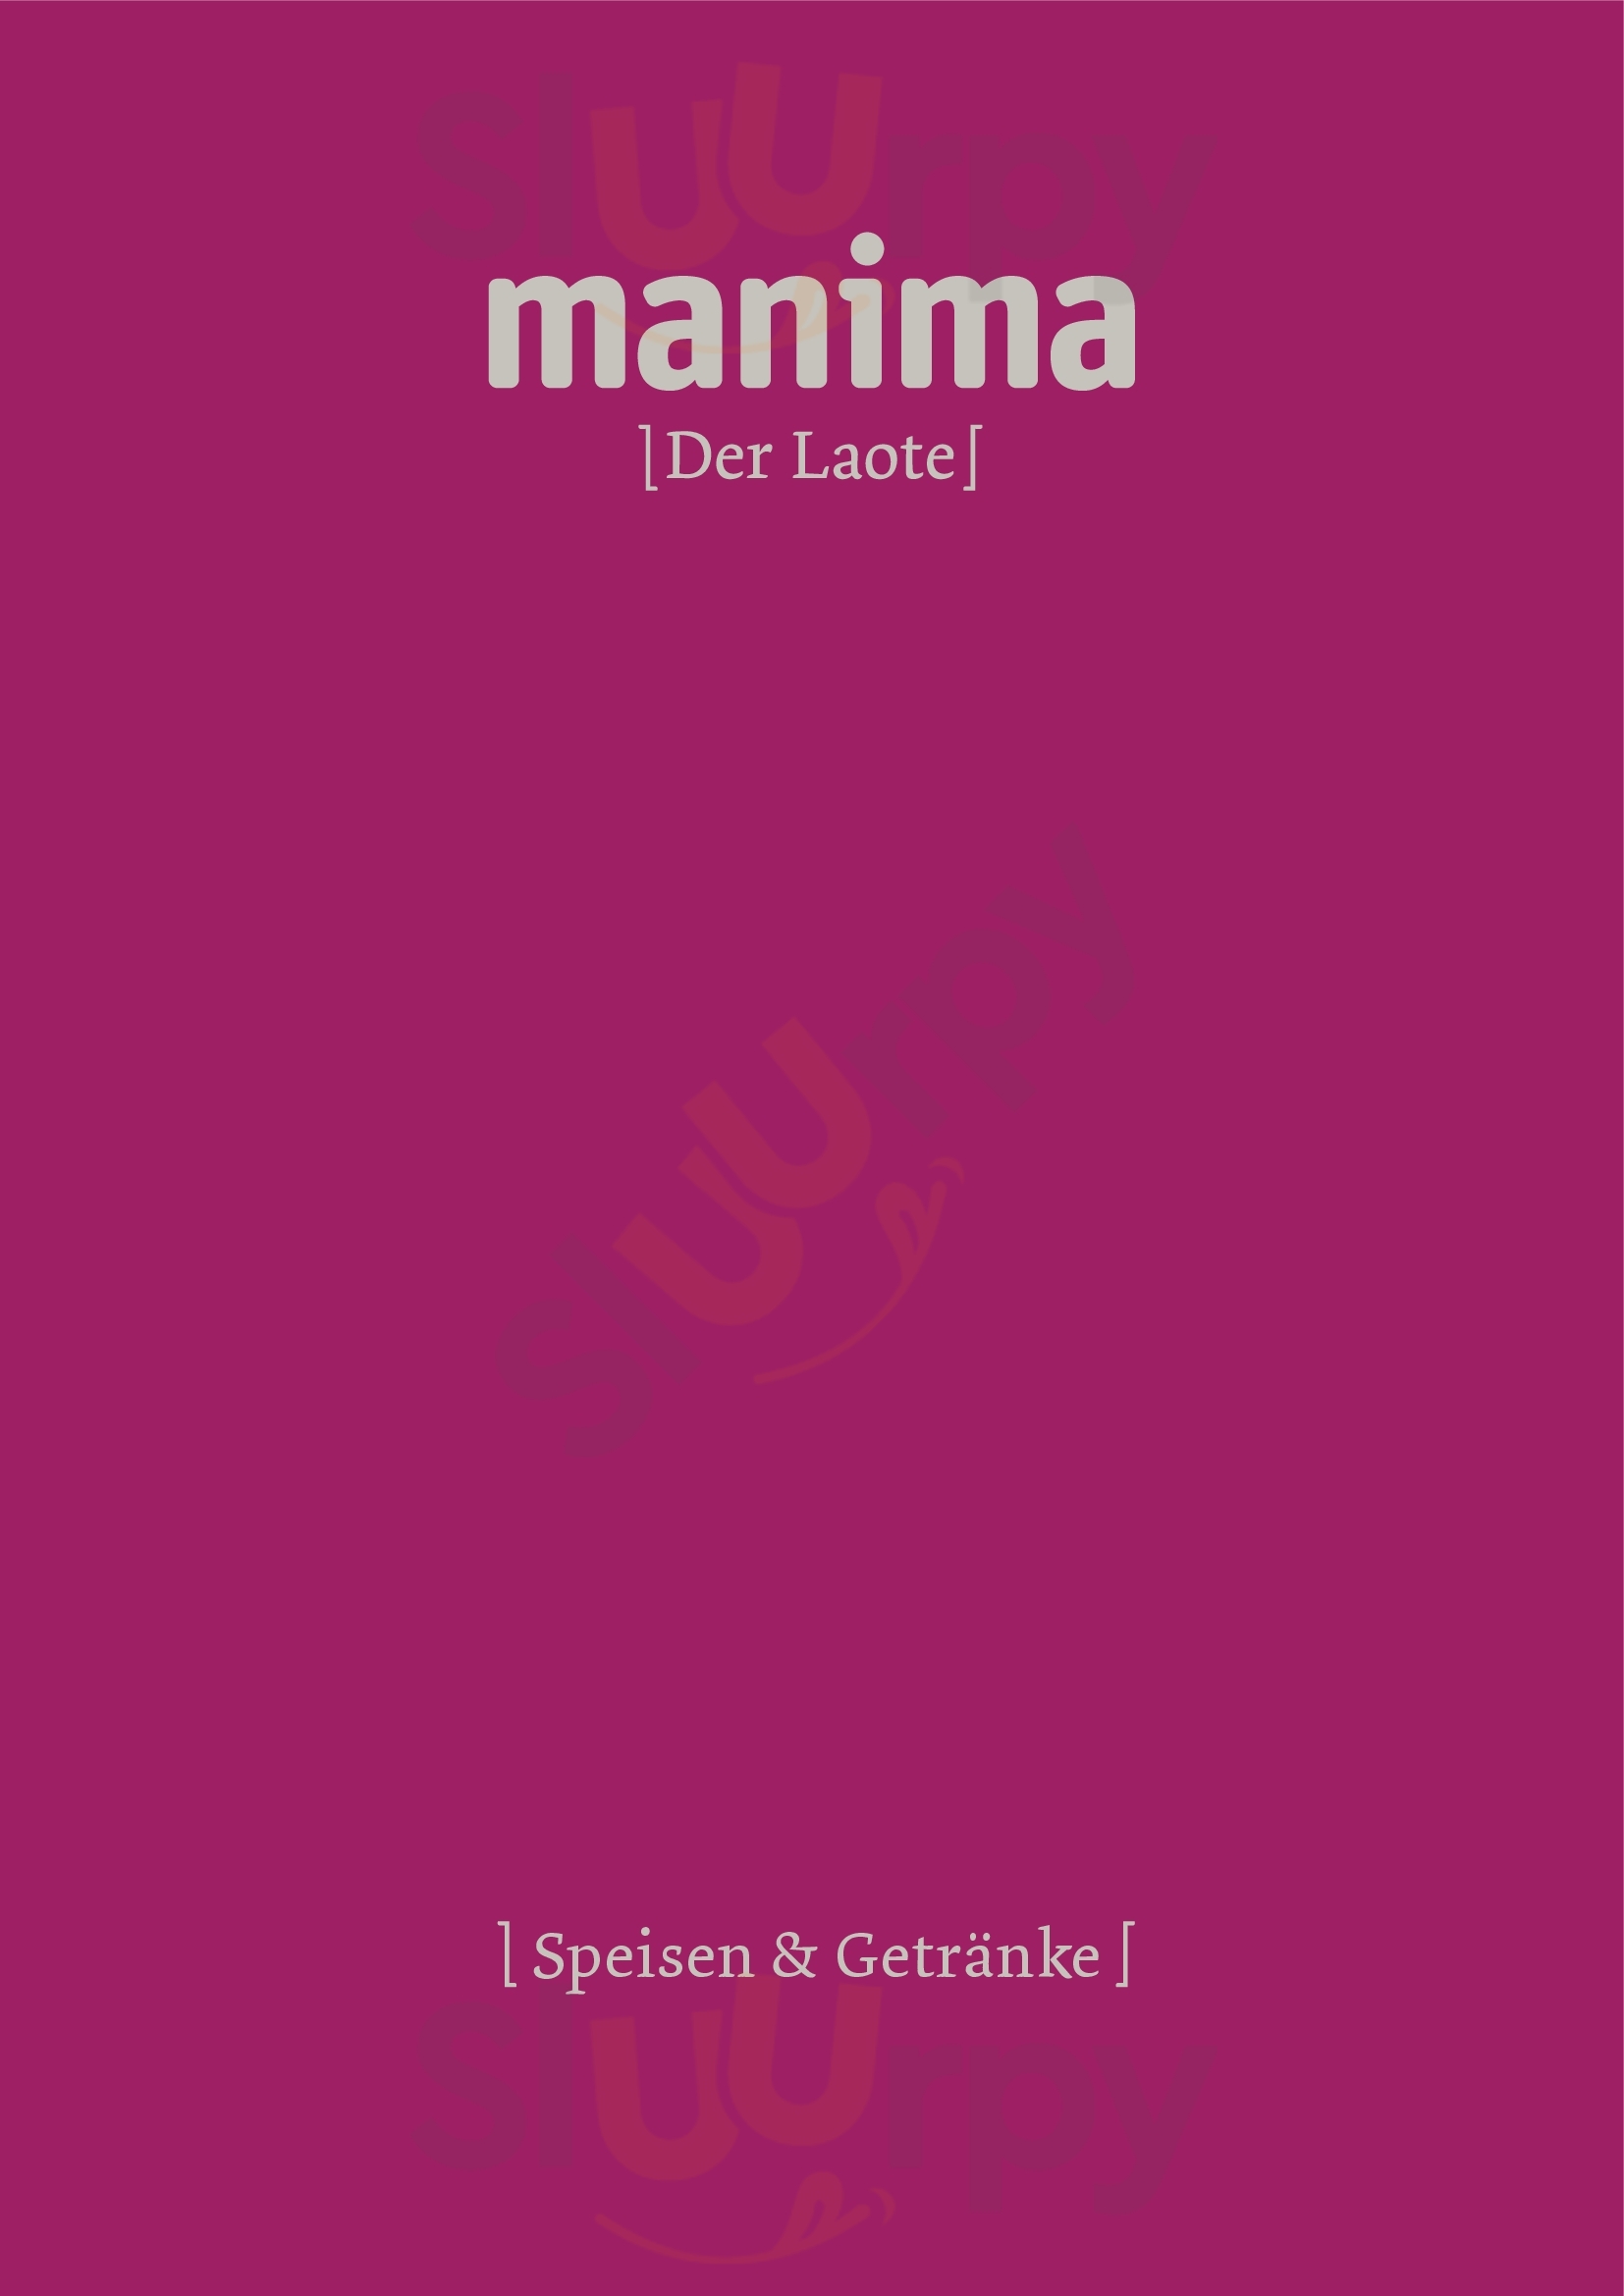 Manima – Der Laote Düsseldorf Menu - 1